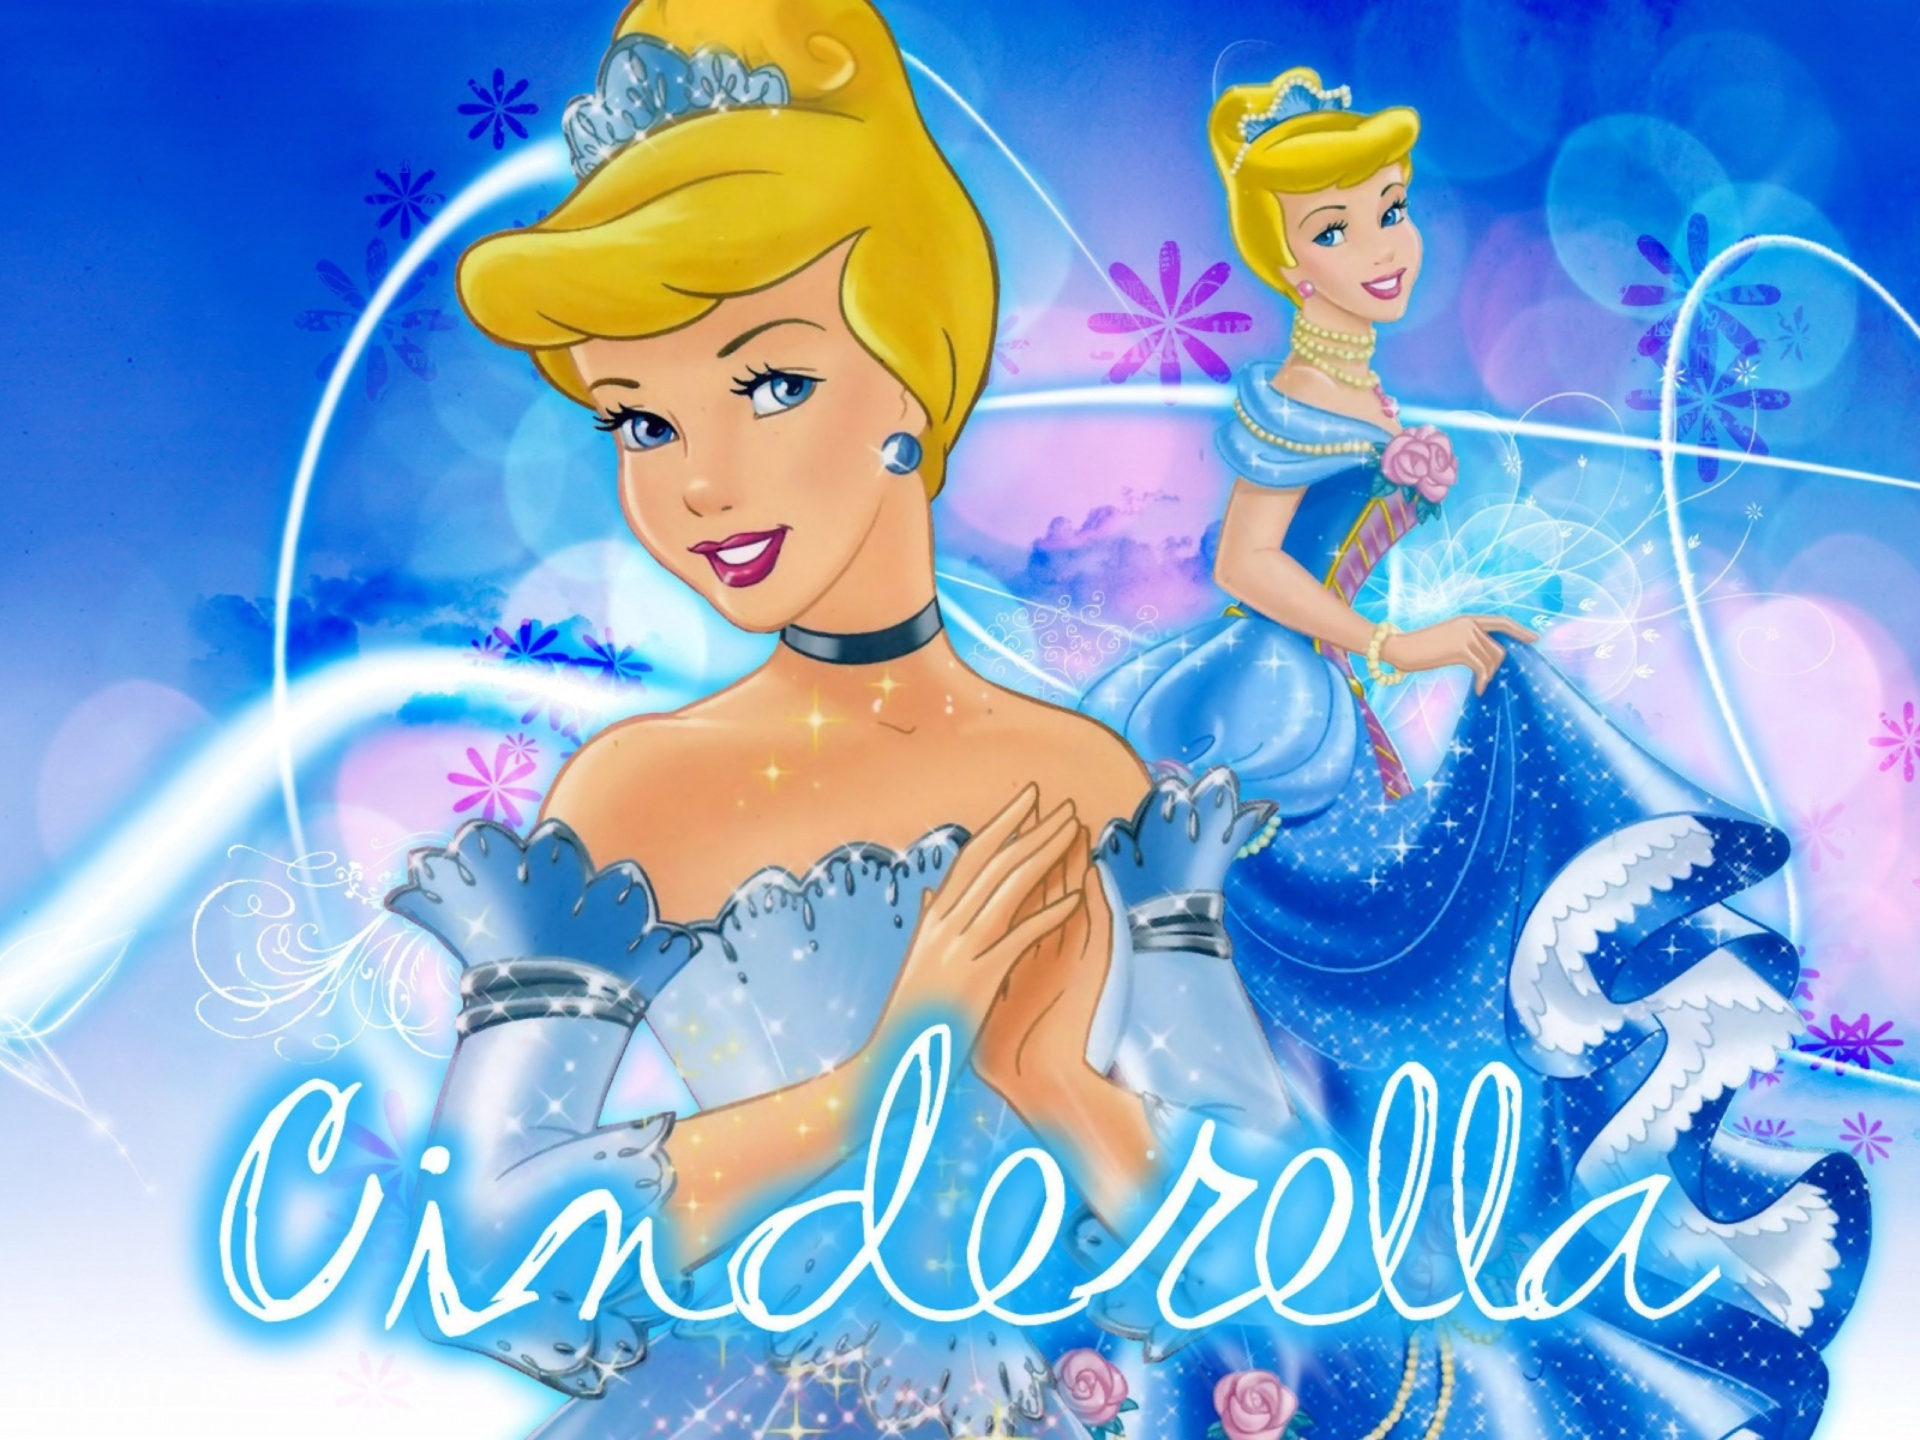 Disney Princess Cinderella Premium wall murals